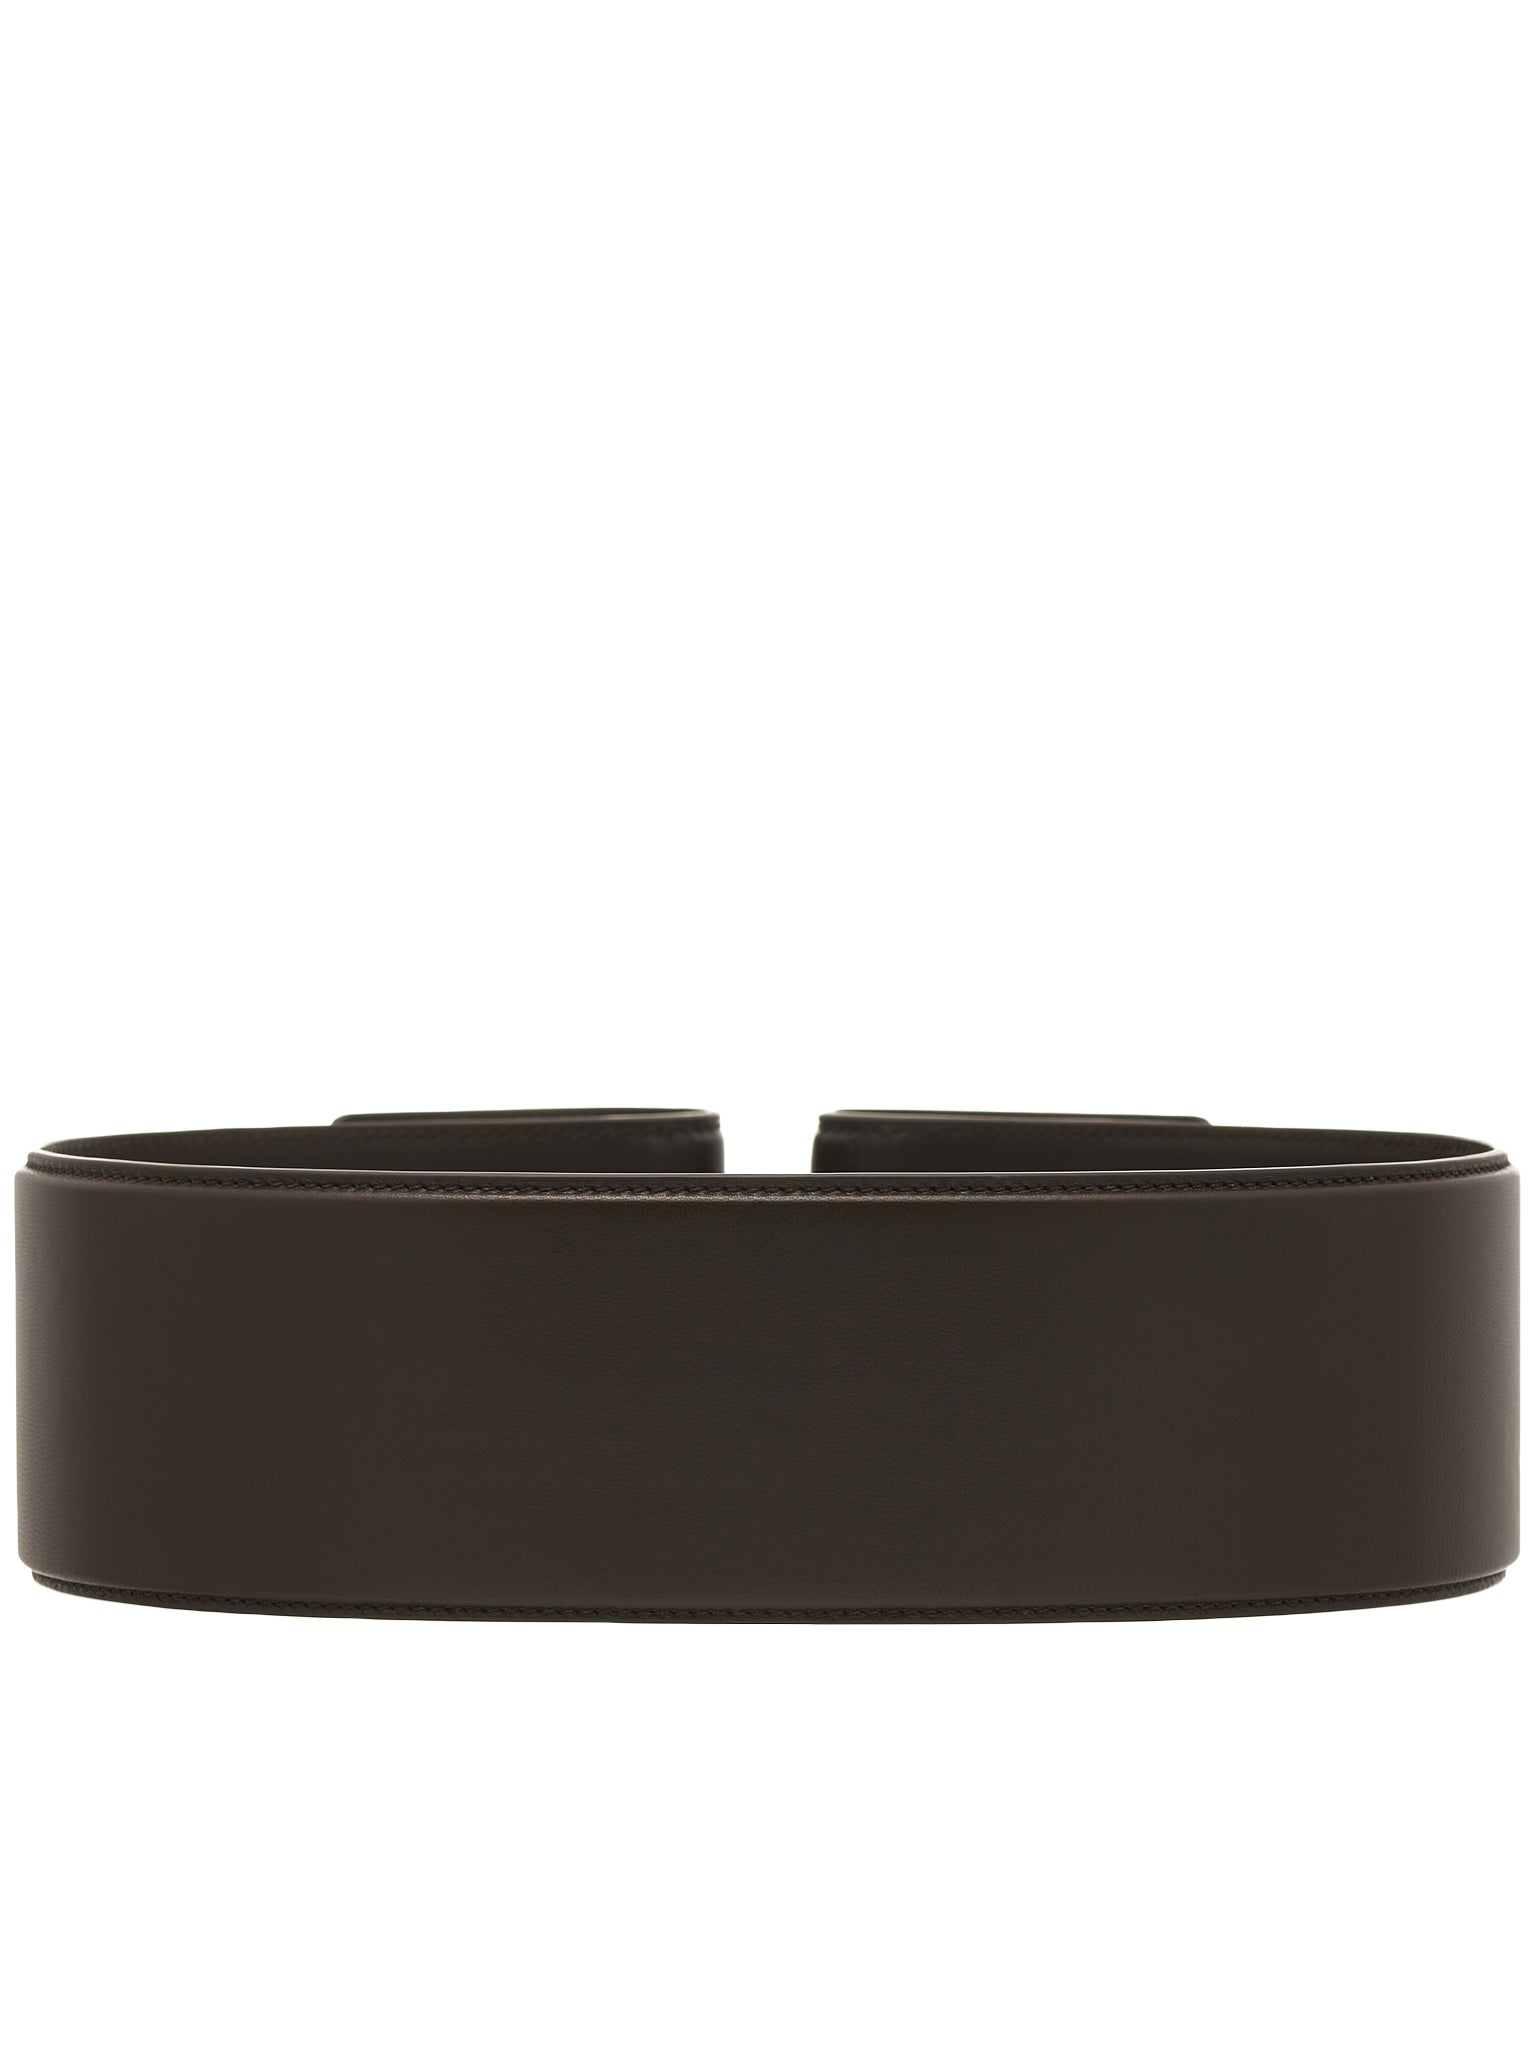 Leather Cuff Belt (716758VCP31-2113-BROWN)